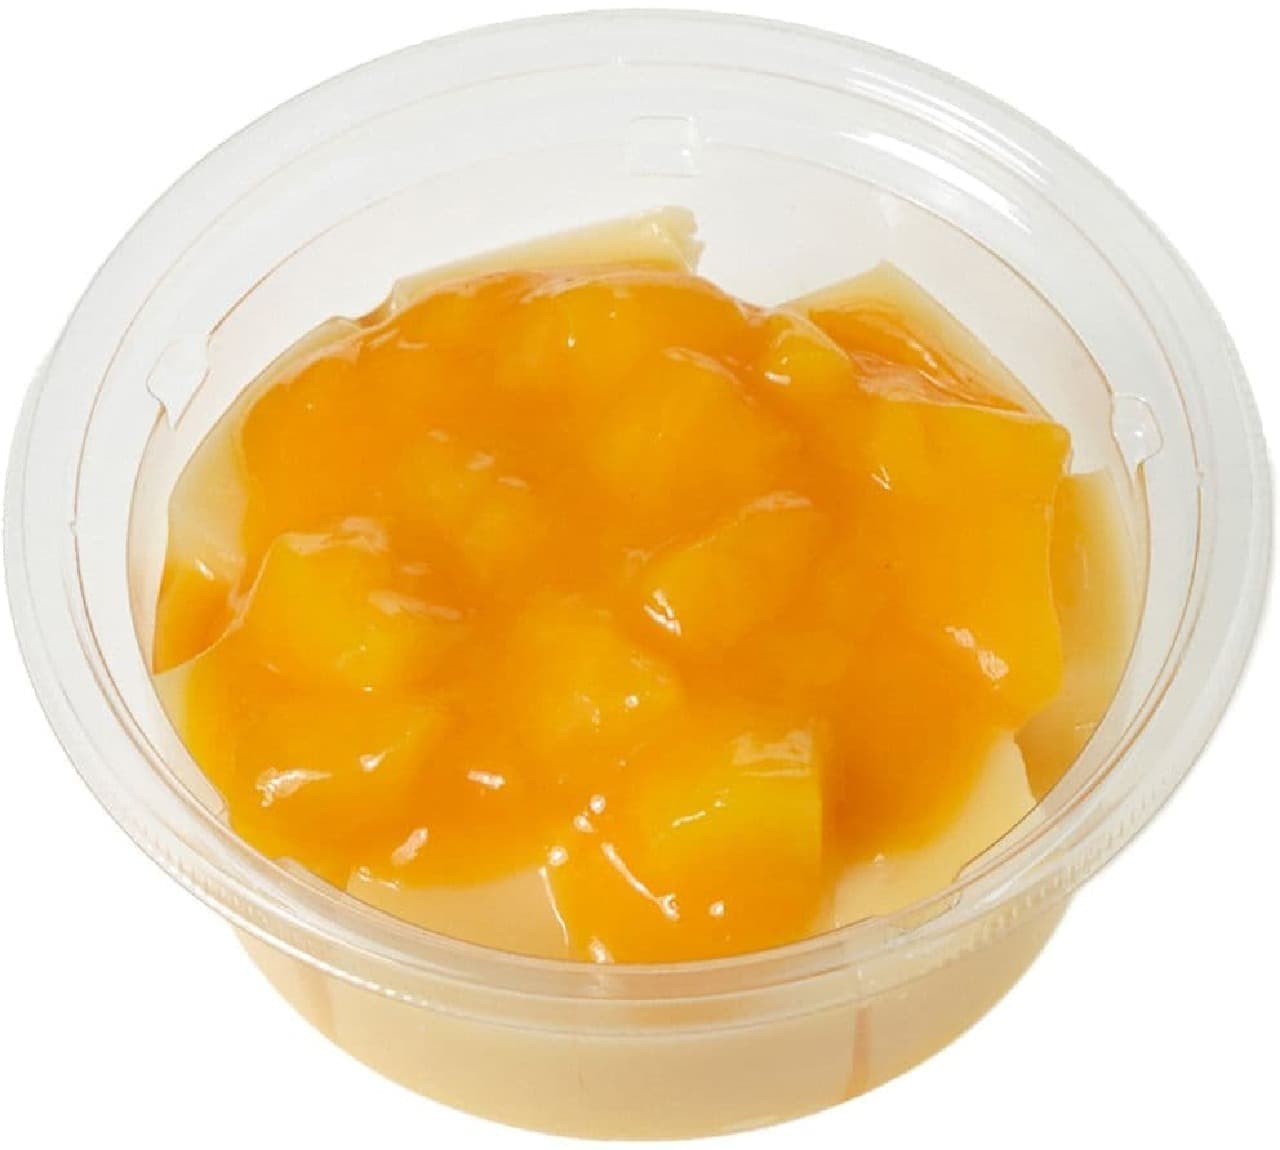 7-ELEVEN "Mottochiri Mango Warabi with Melty Mango Sauce